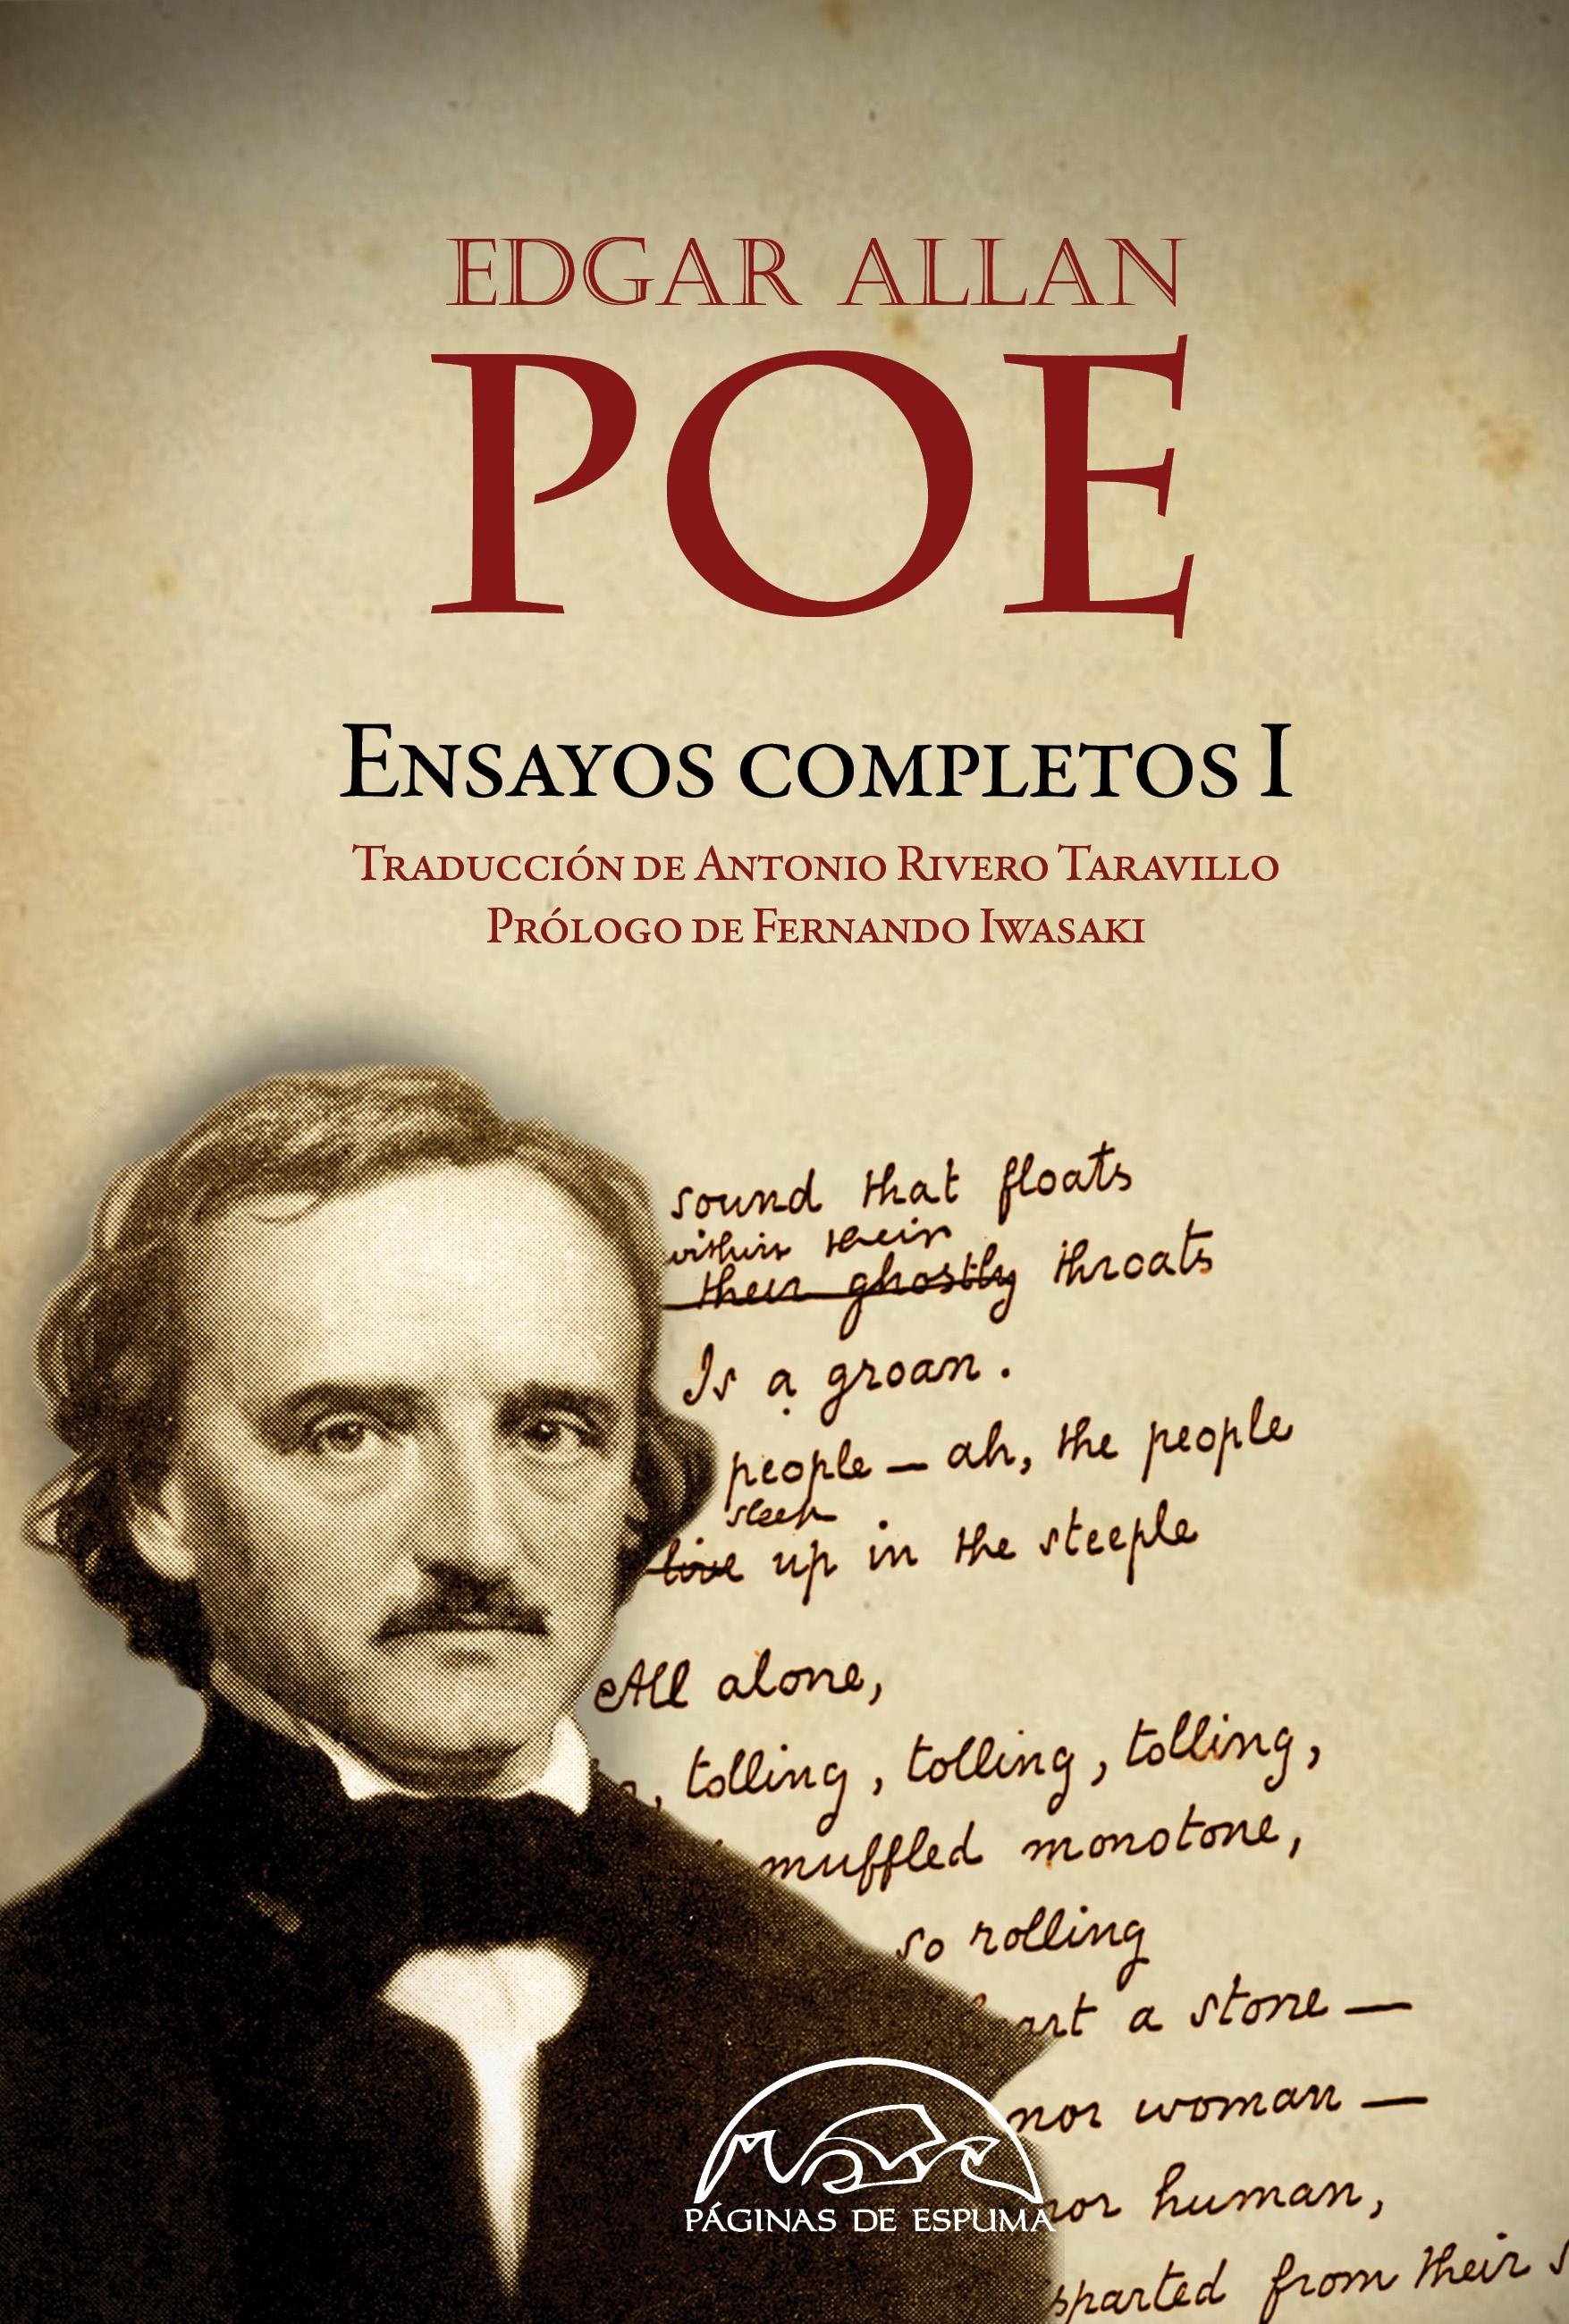 Ensayos completos - I "(Edgar Allan Poe)"